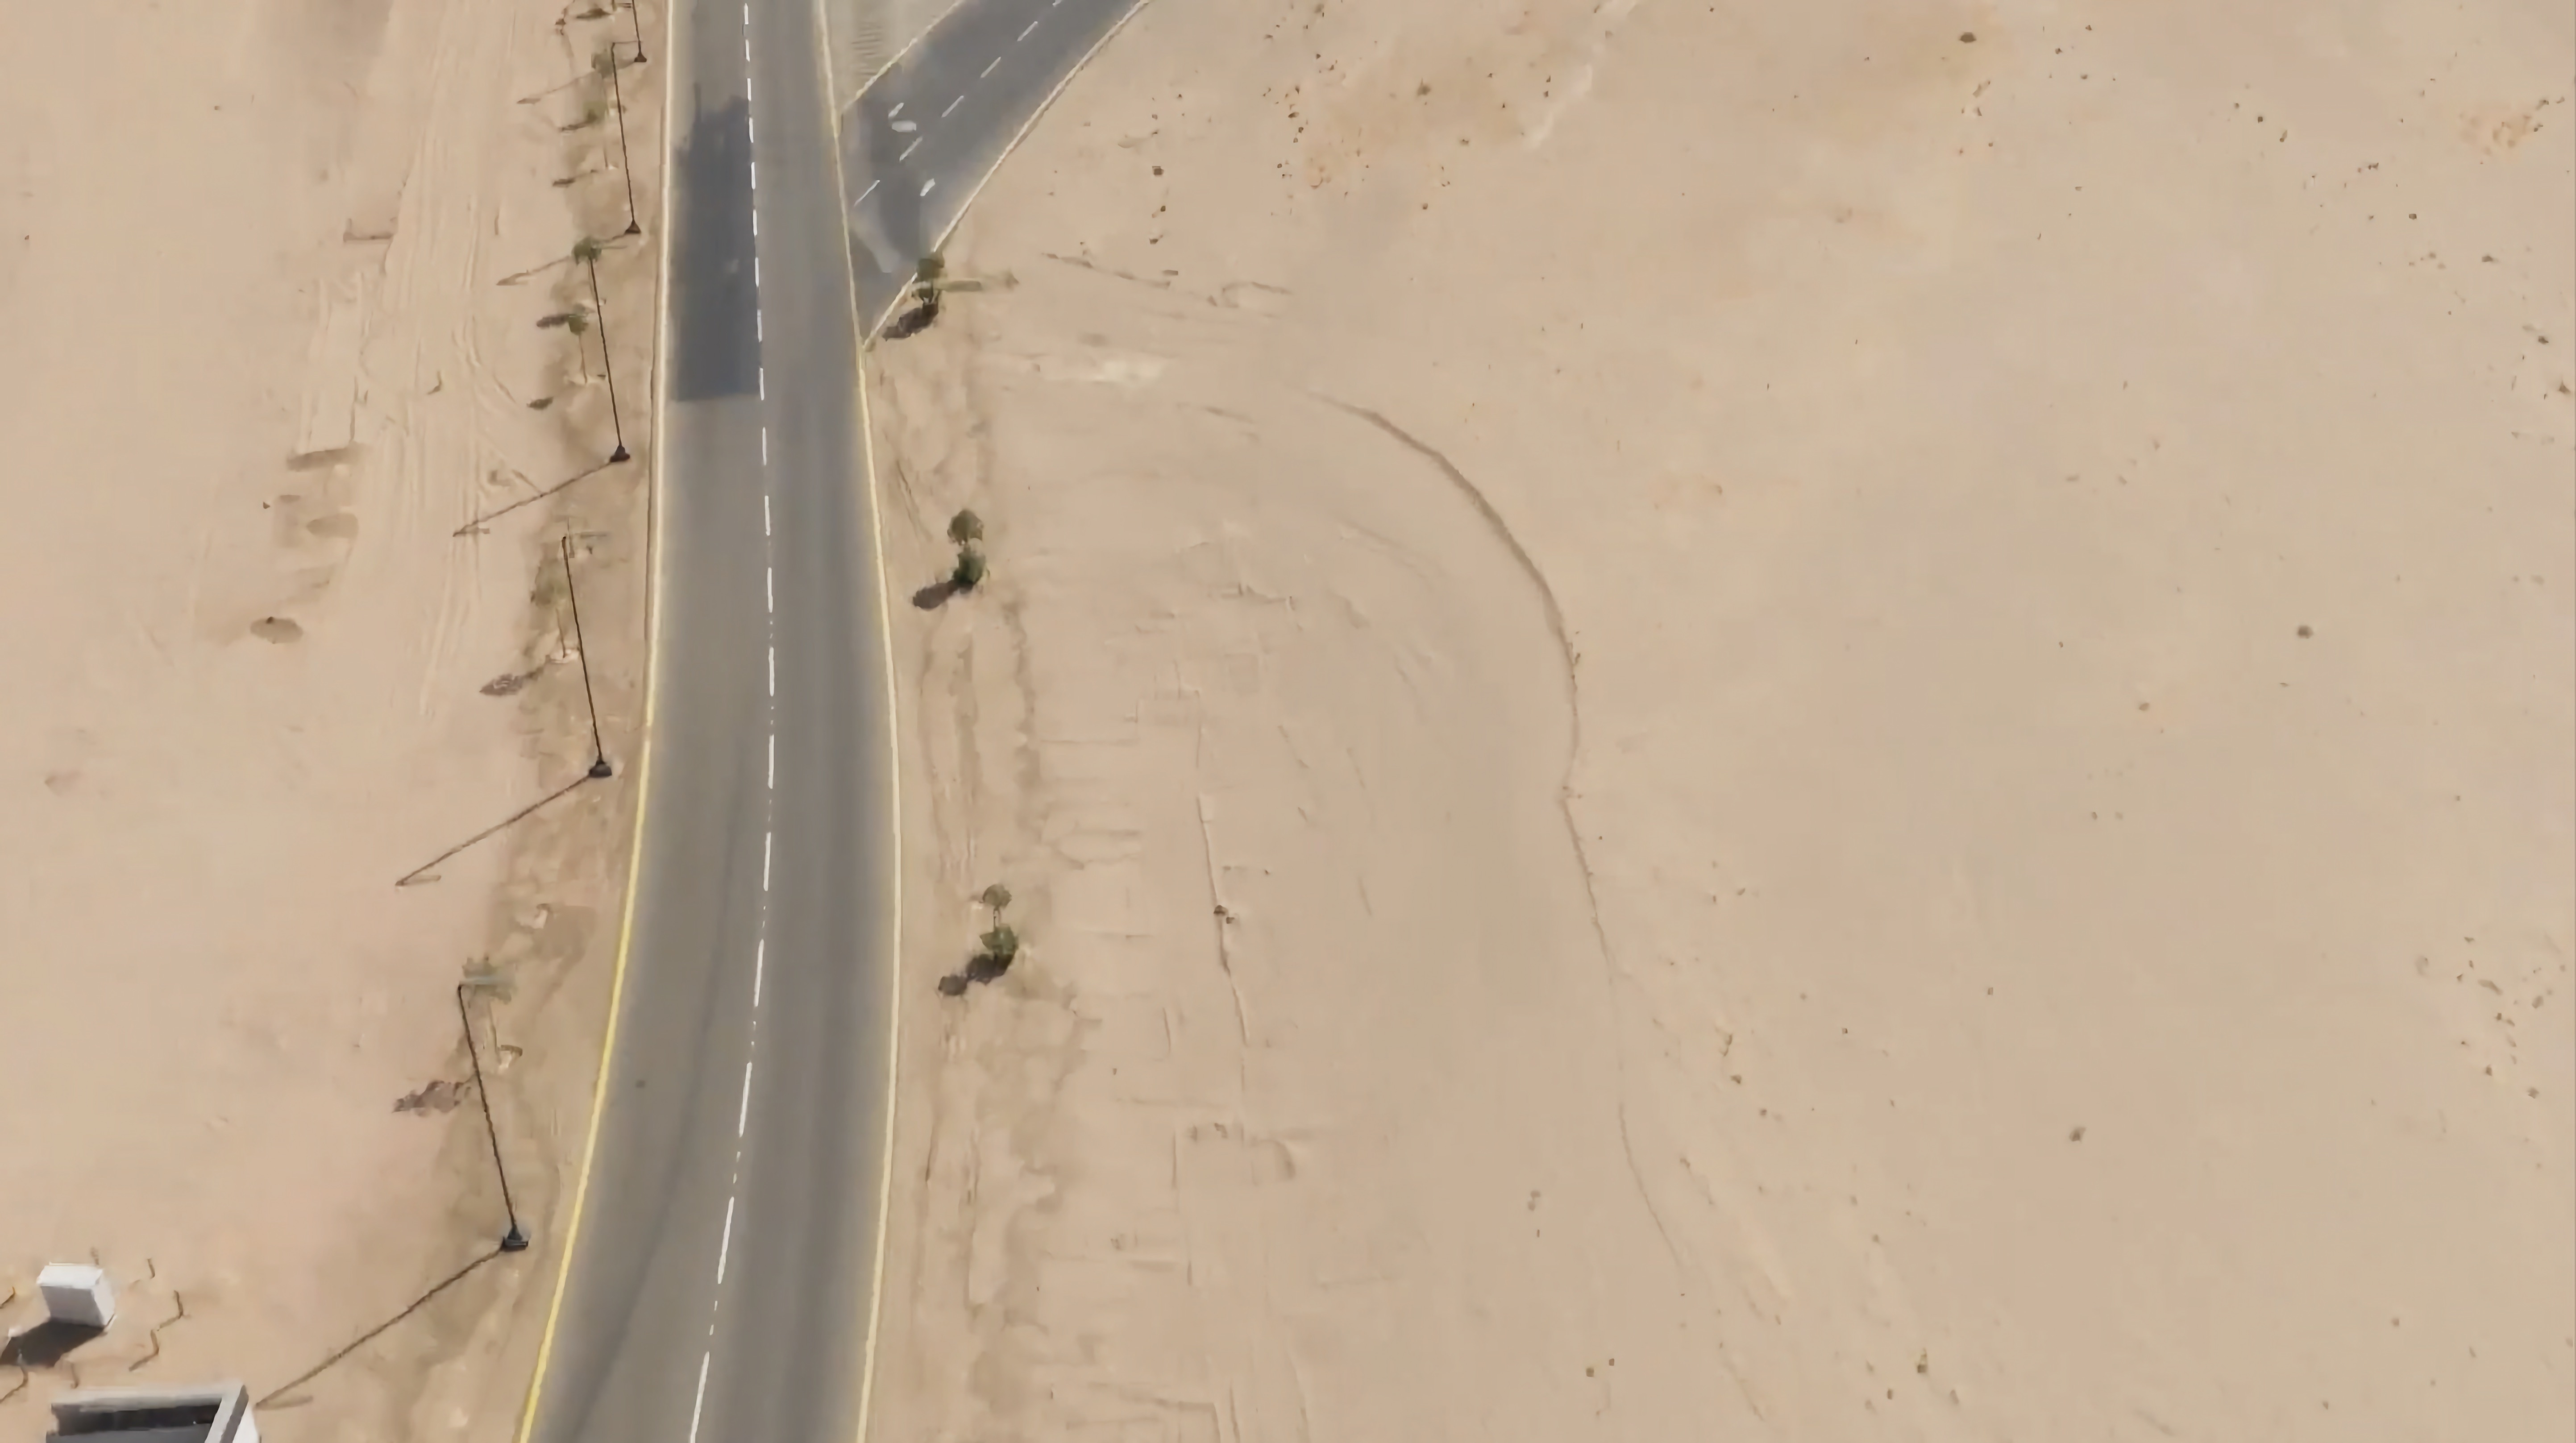 Bird's eye view of a desert road - NEOM Investment Fund